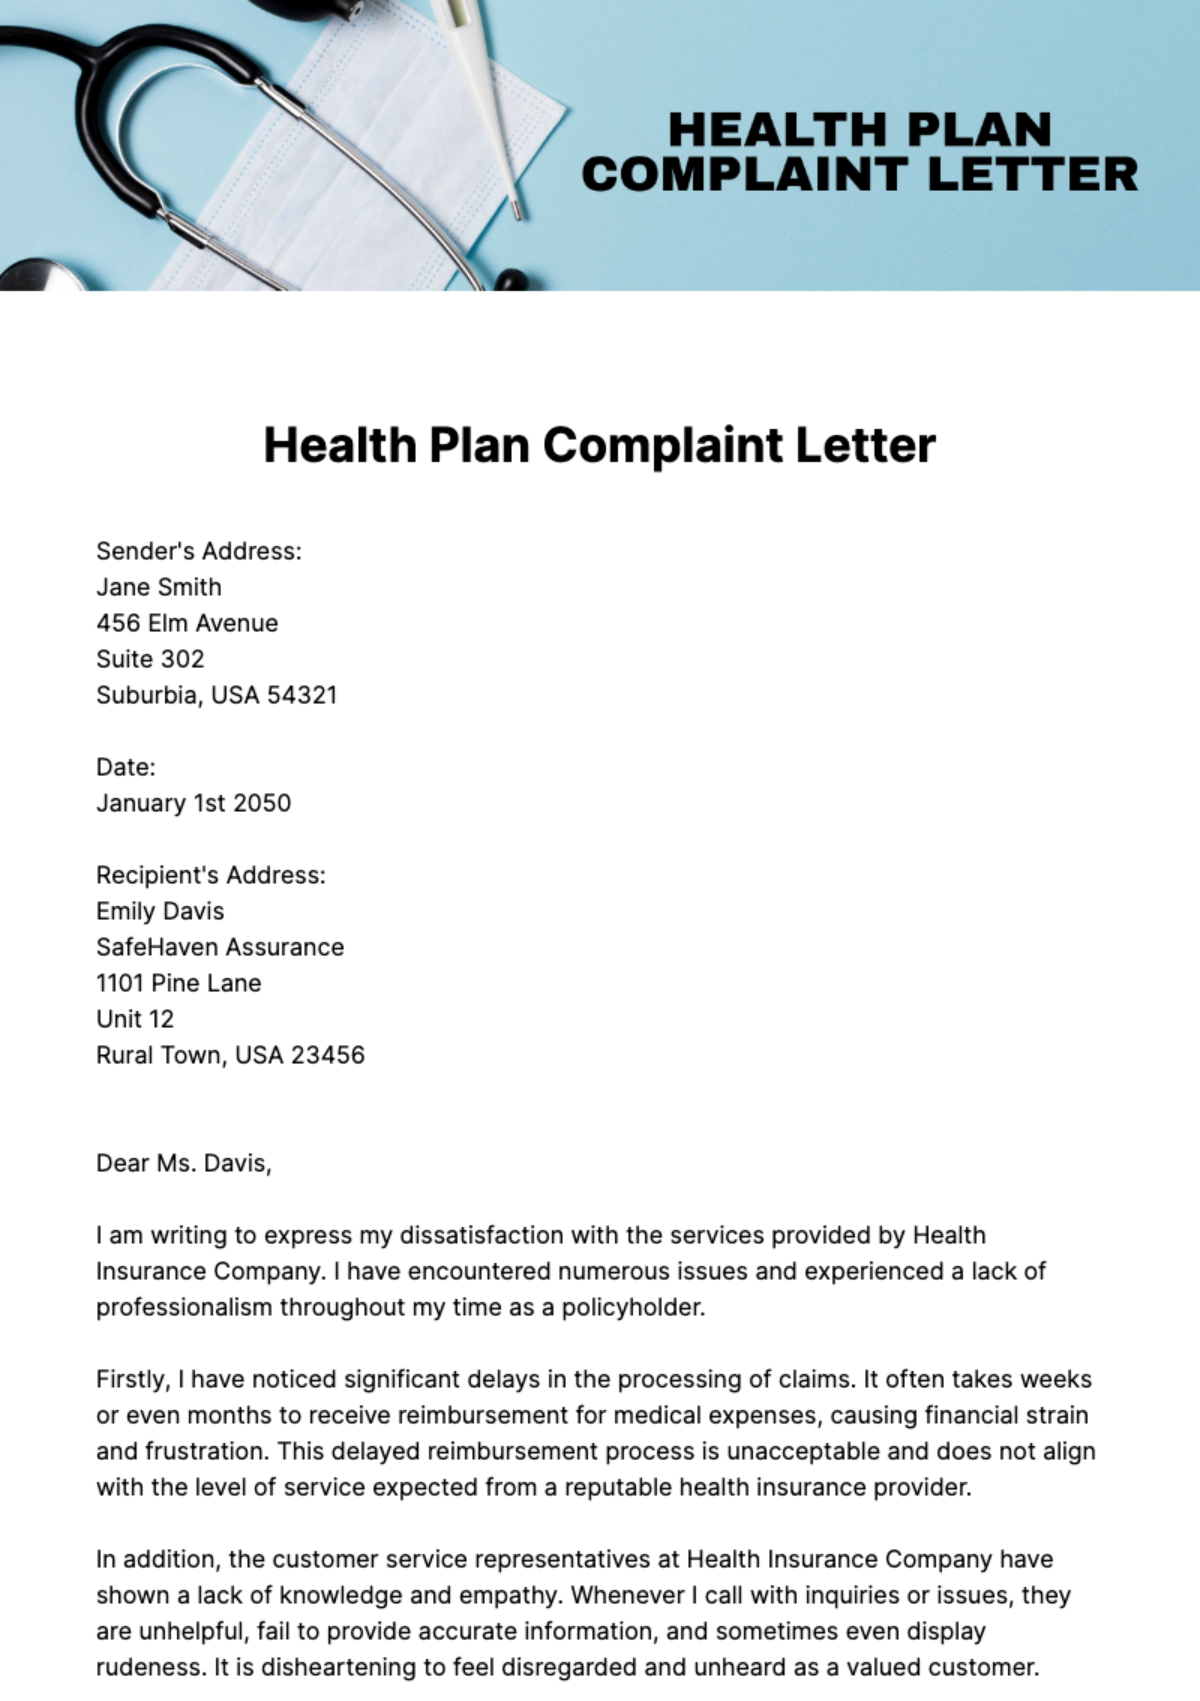 Health Plan Complaint Letter Template